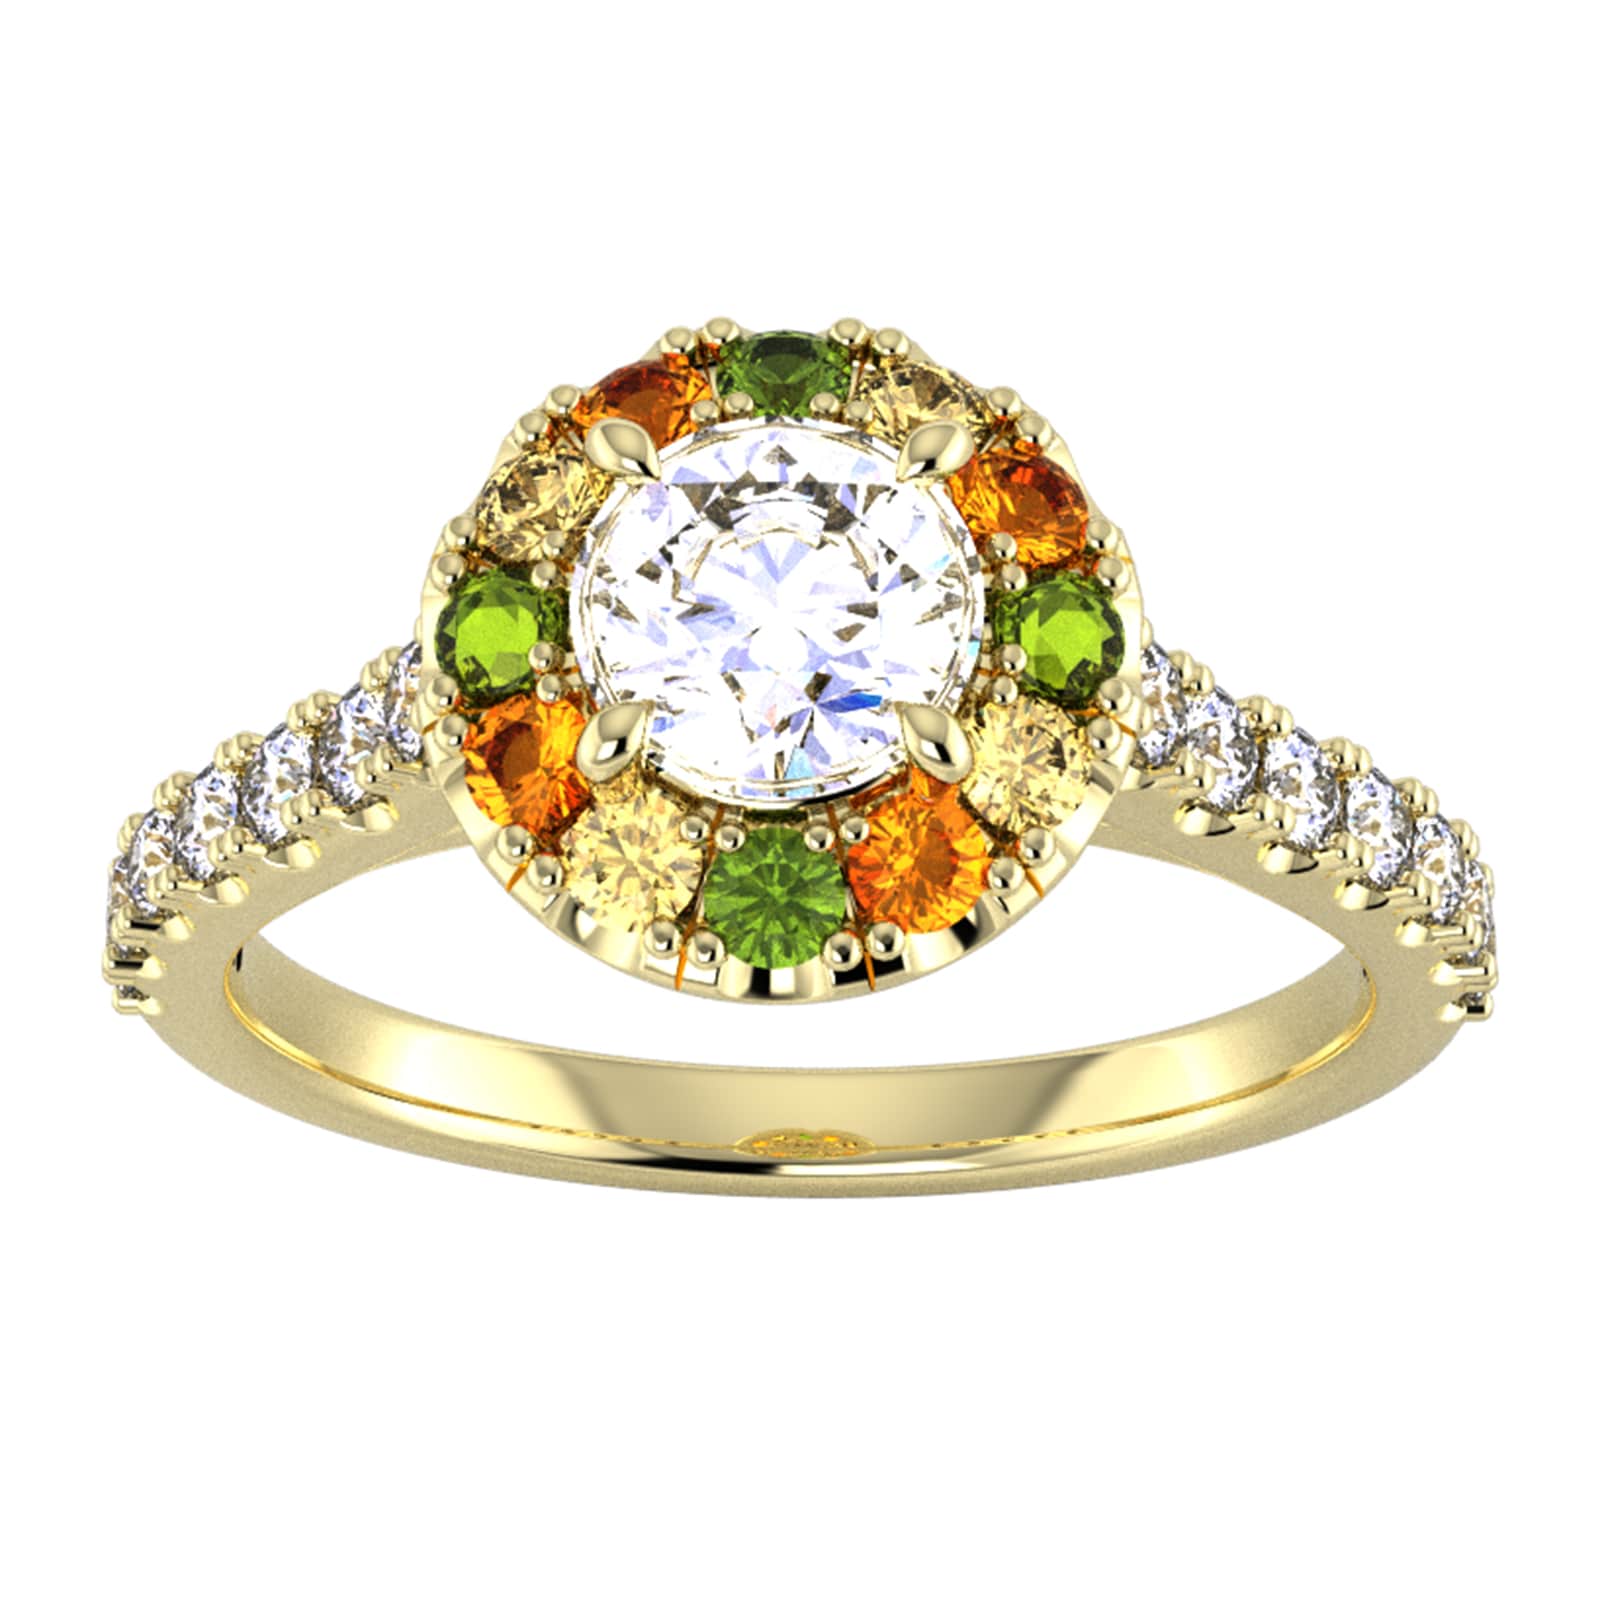 18ct Yellow Gold Diamond & Yellow, Orange, Green Sapphire Halo Ring - Ring Size H.5